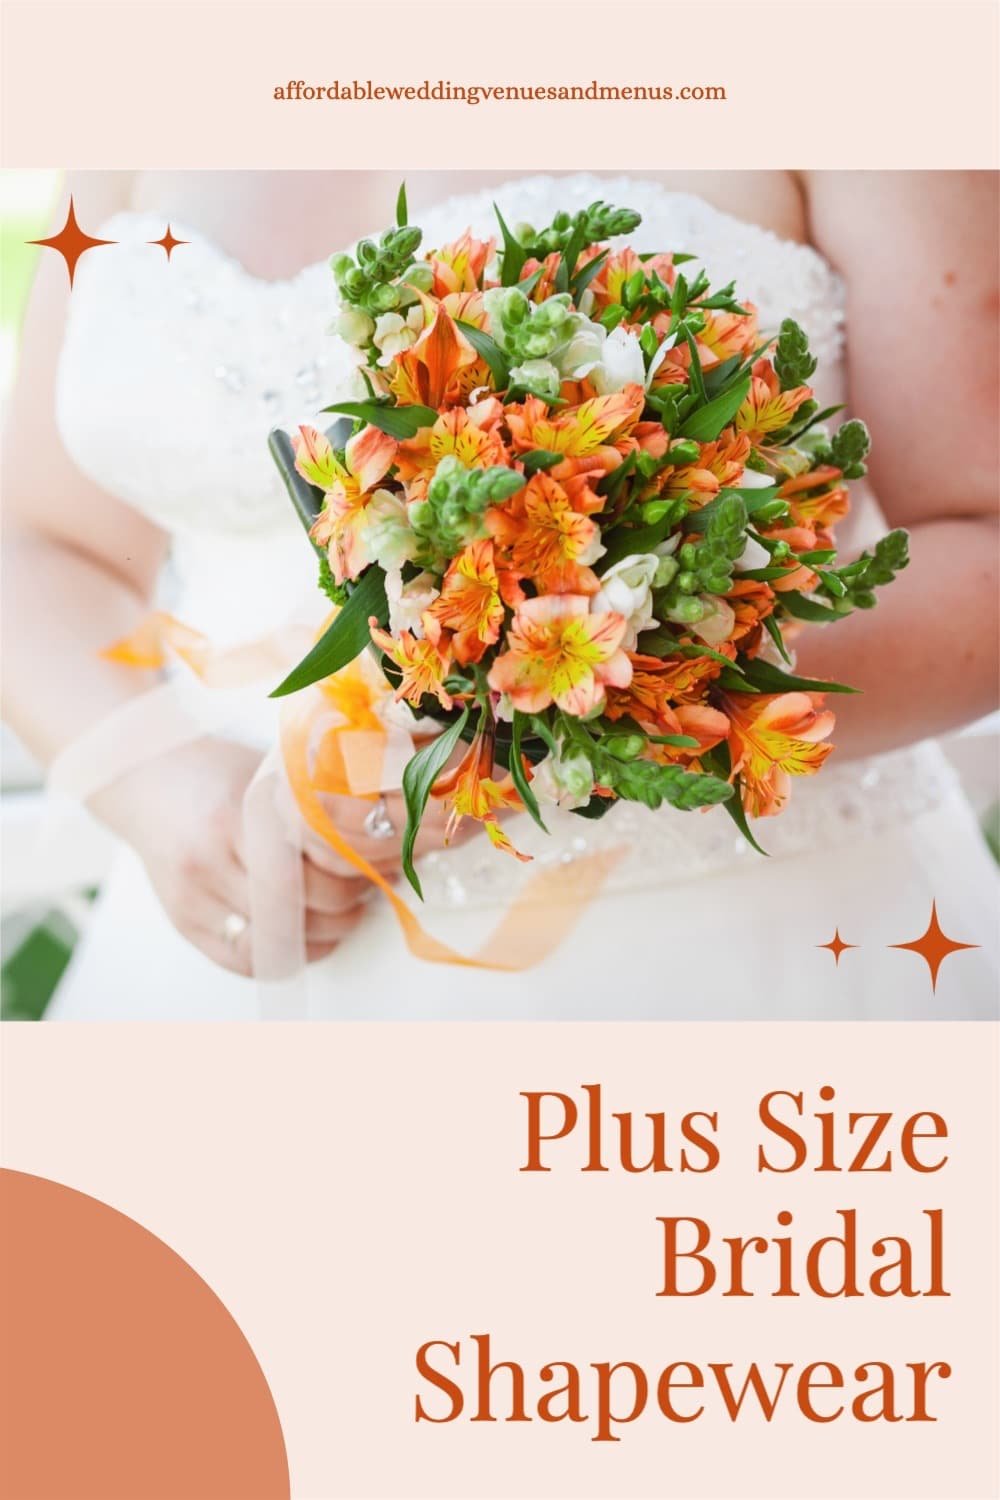 snorkel Morgen resultat Best Plus Size Bridal Shapewear For Wedding Dress Styles — Affordable  Wedding Venues & Menus